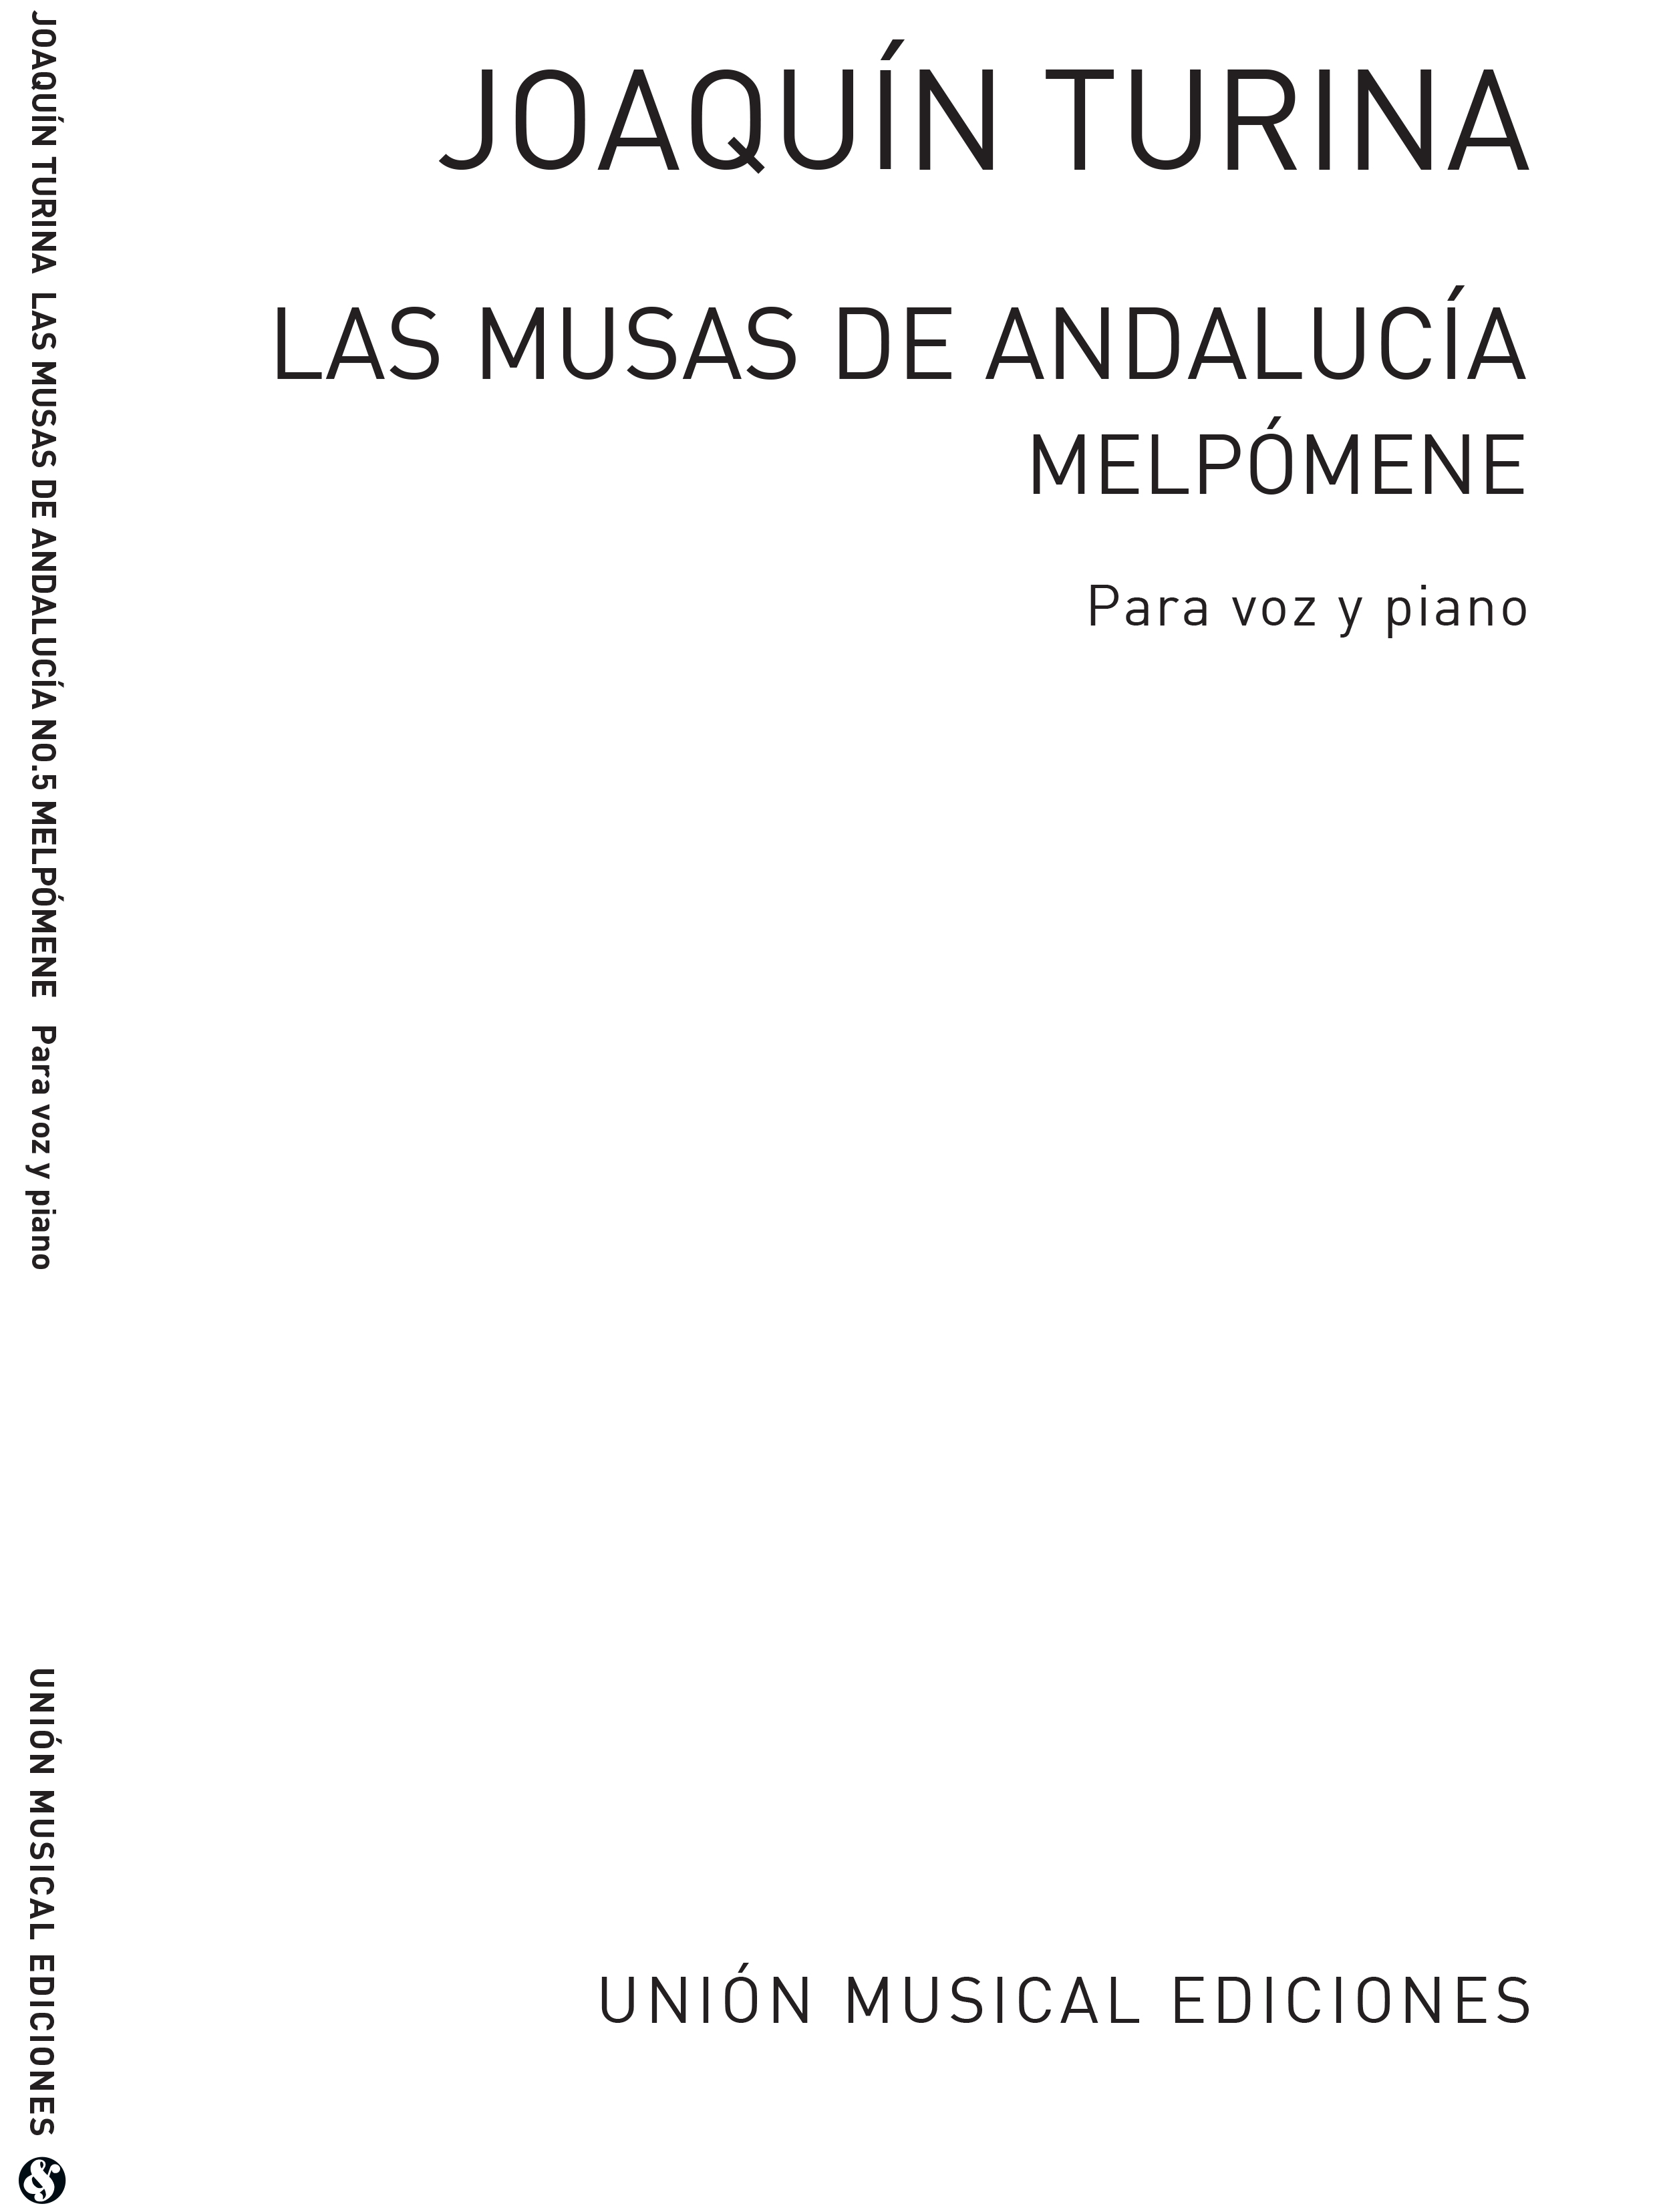 Joaquín Turina: Melpomene De Las Musas De Andalucia: Voice: Instrumental Work